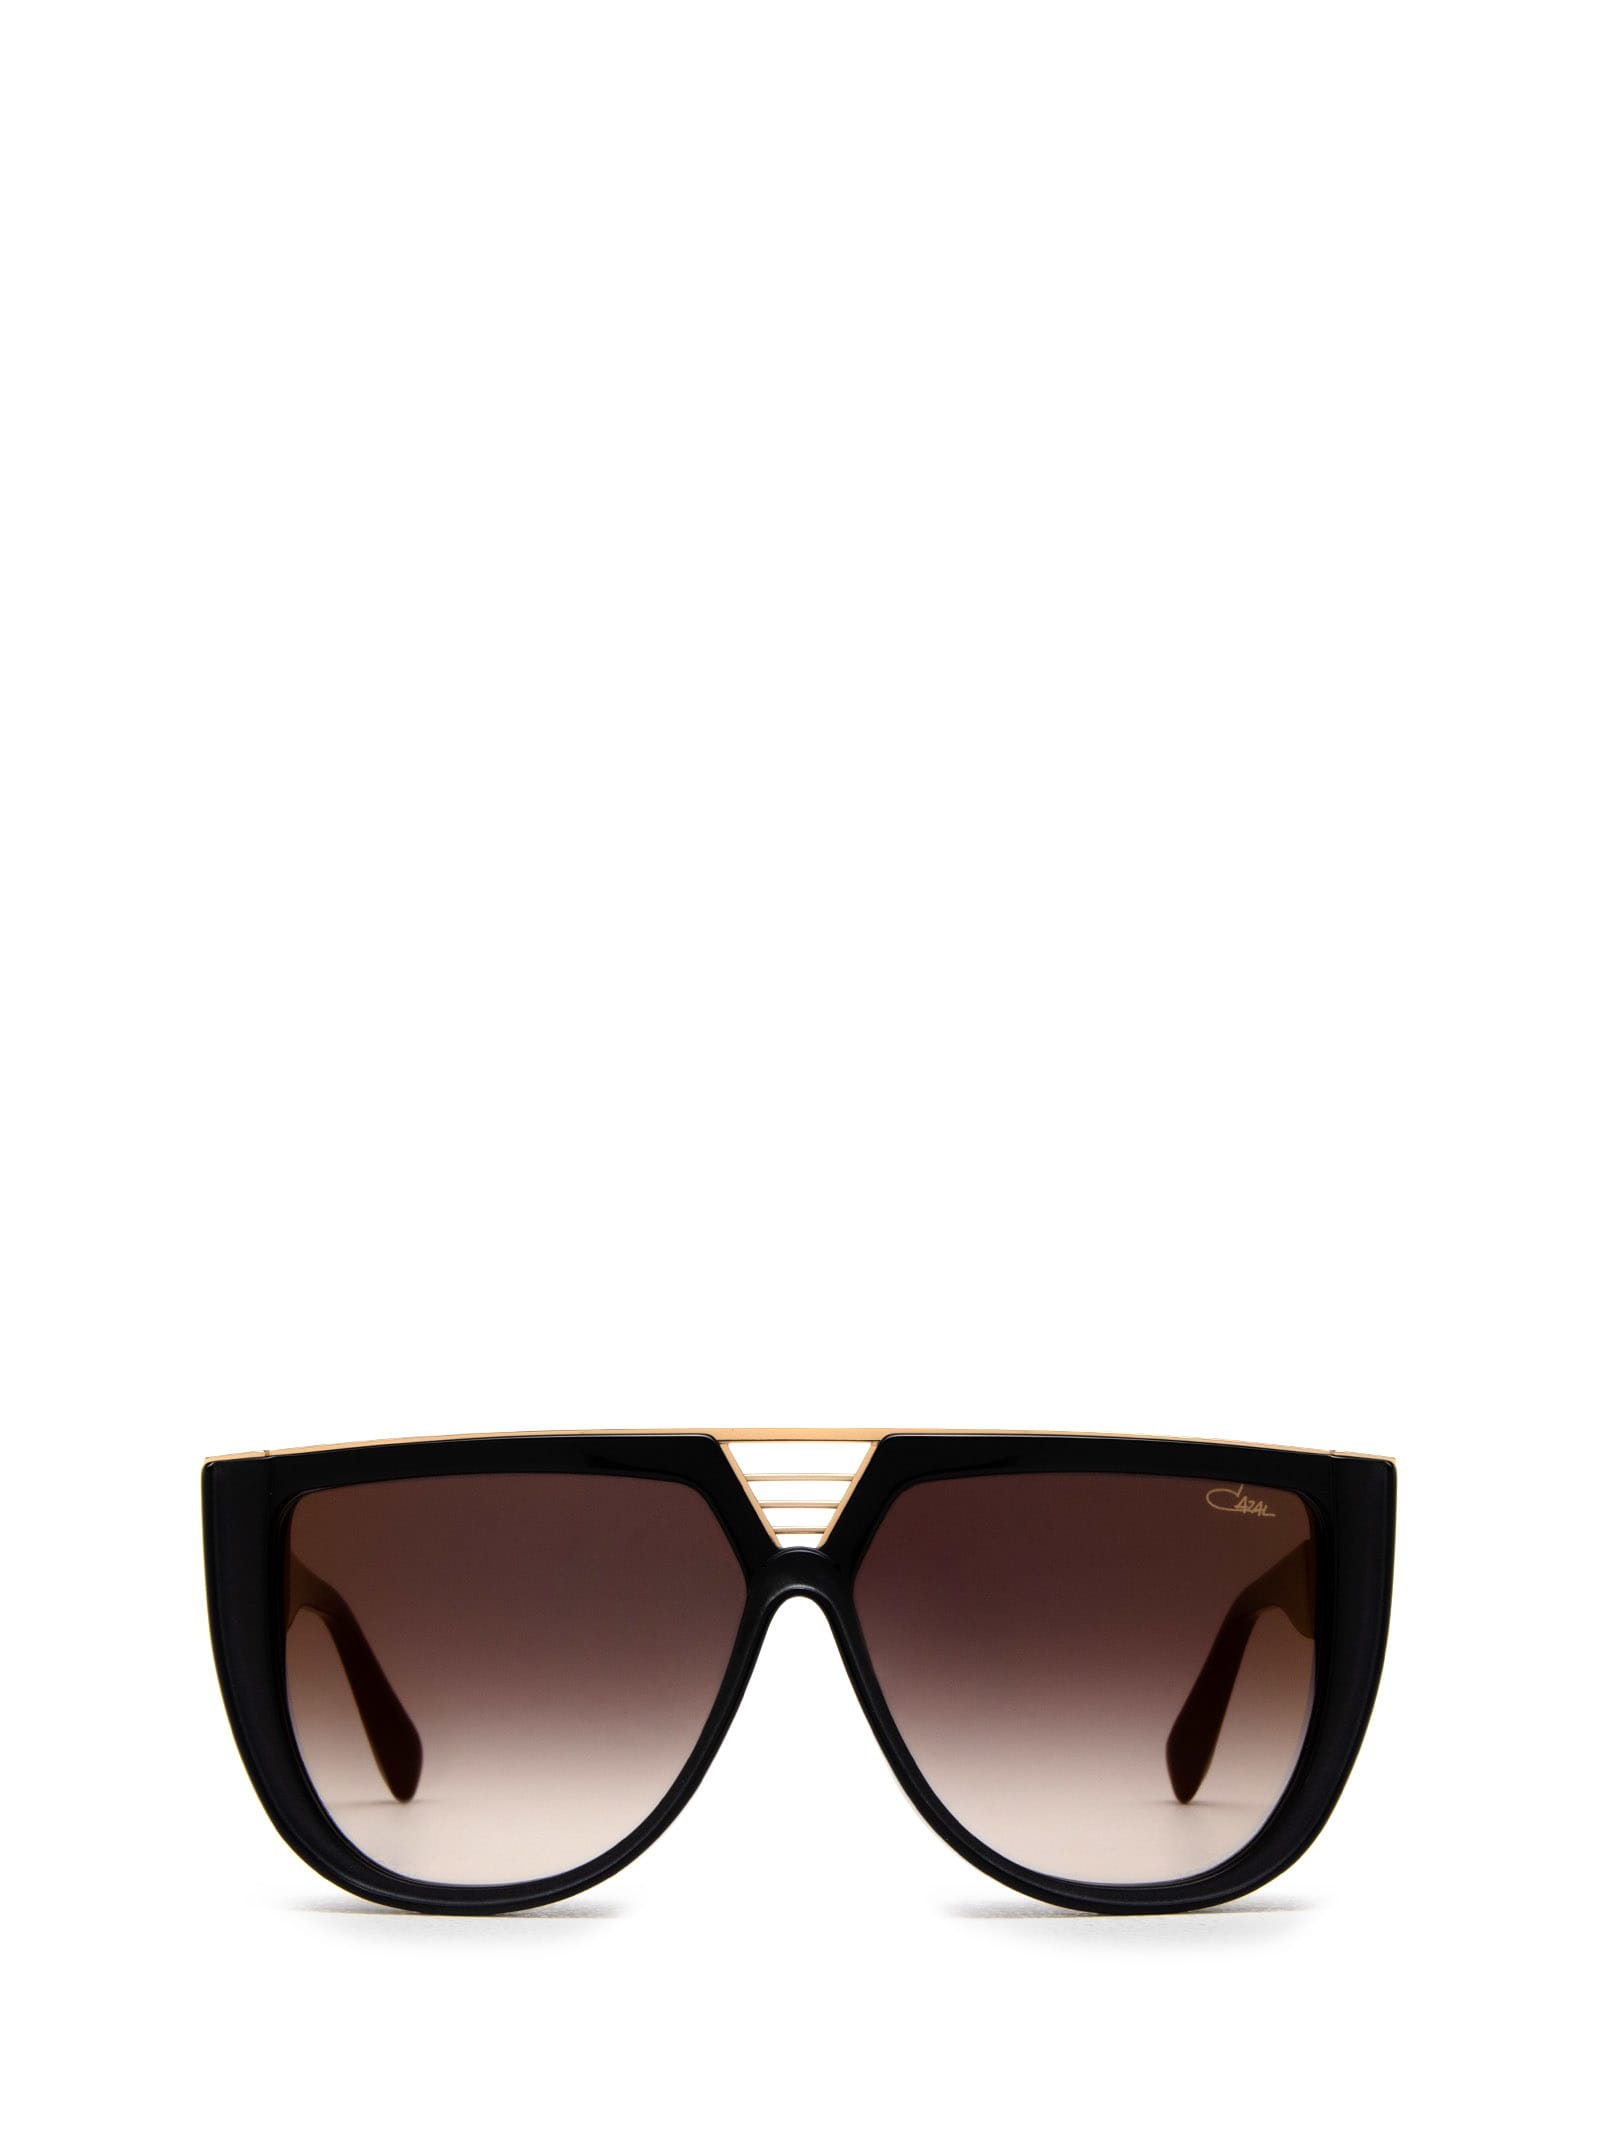 Cazal 8511 Black - Gold Sunglasses